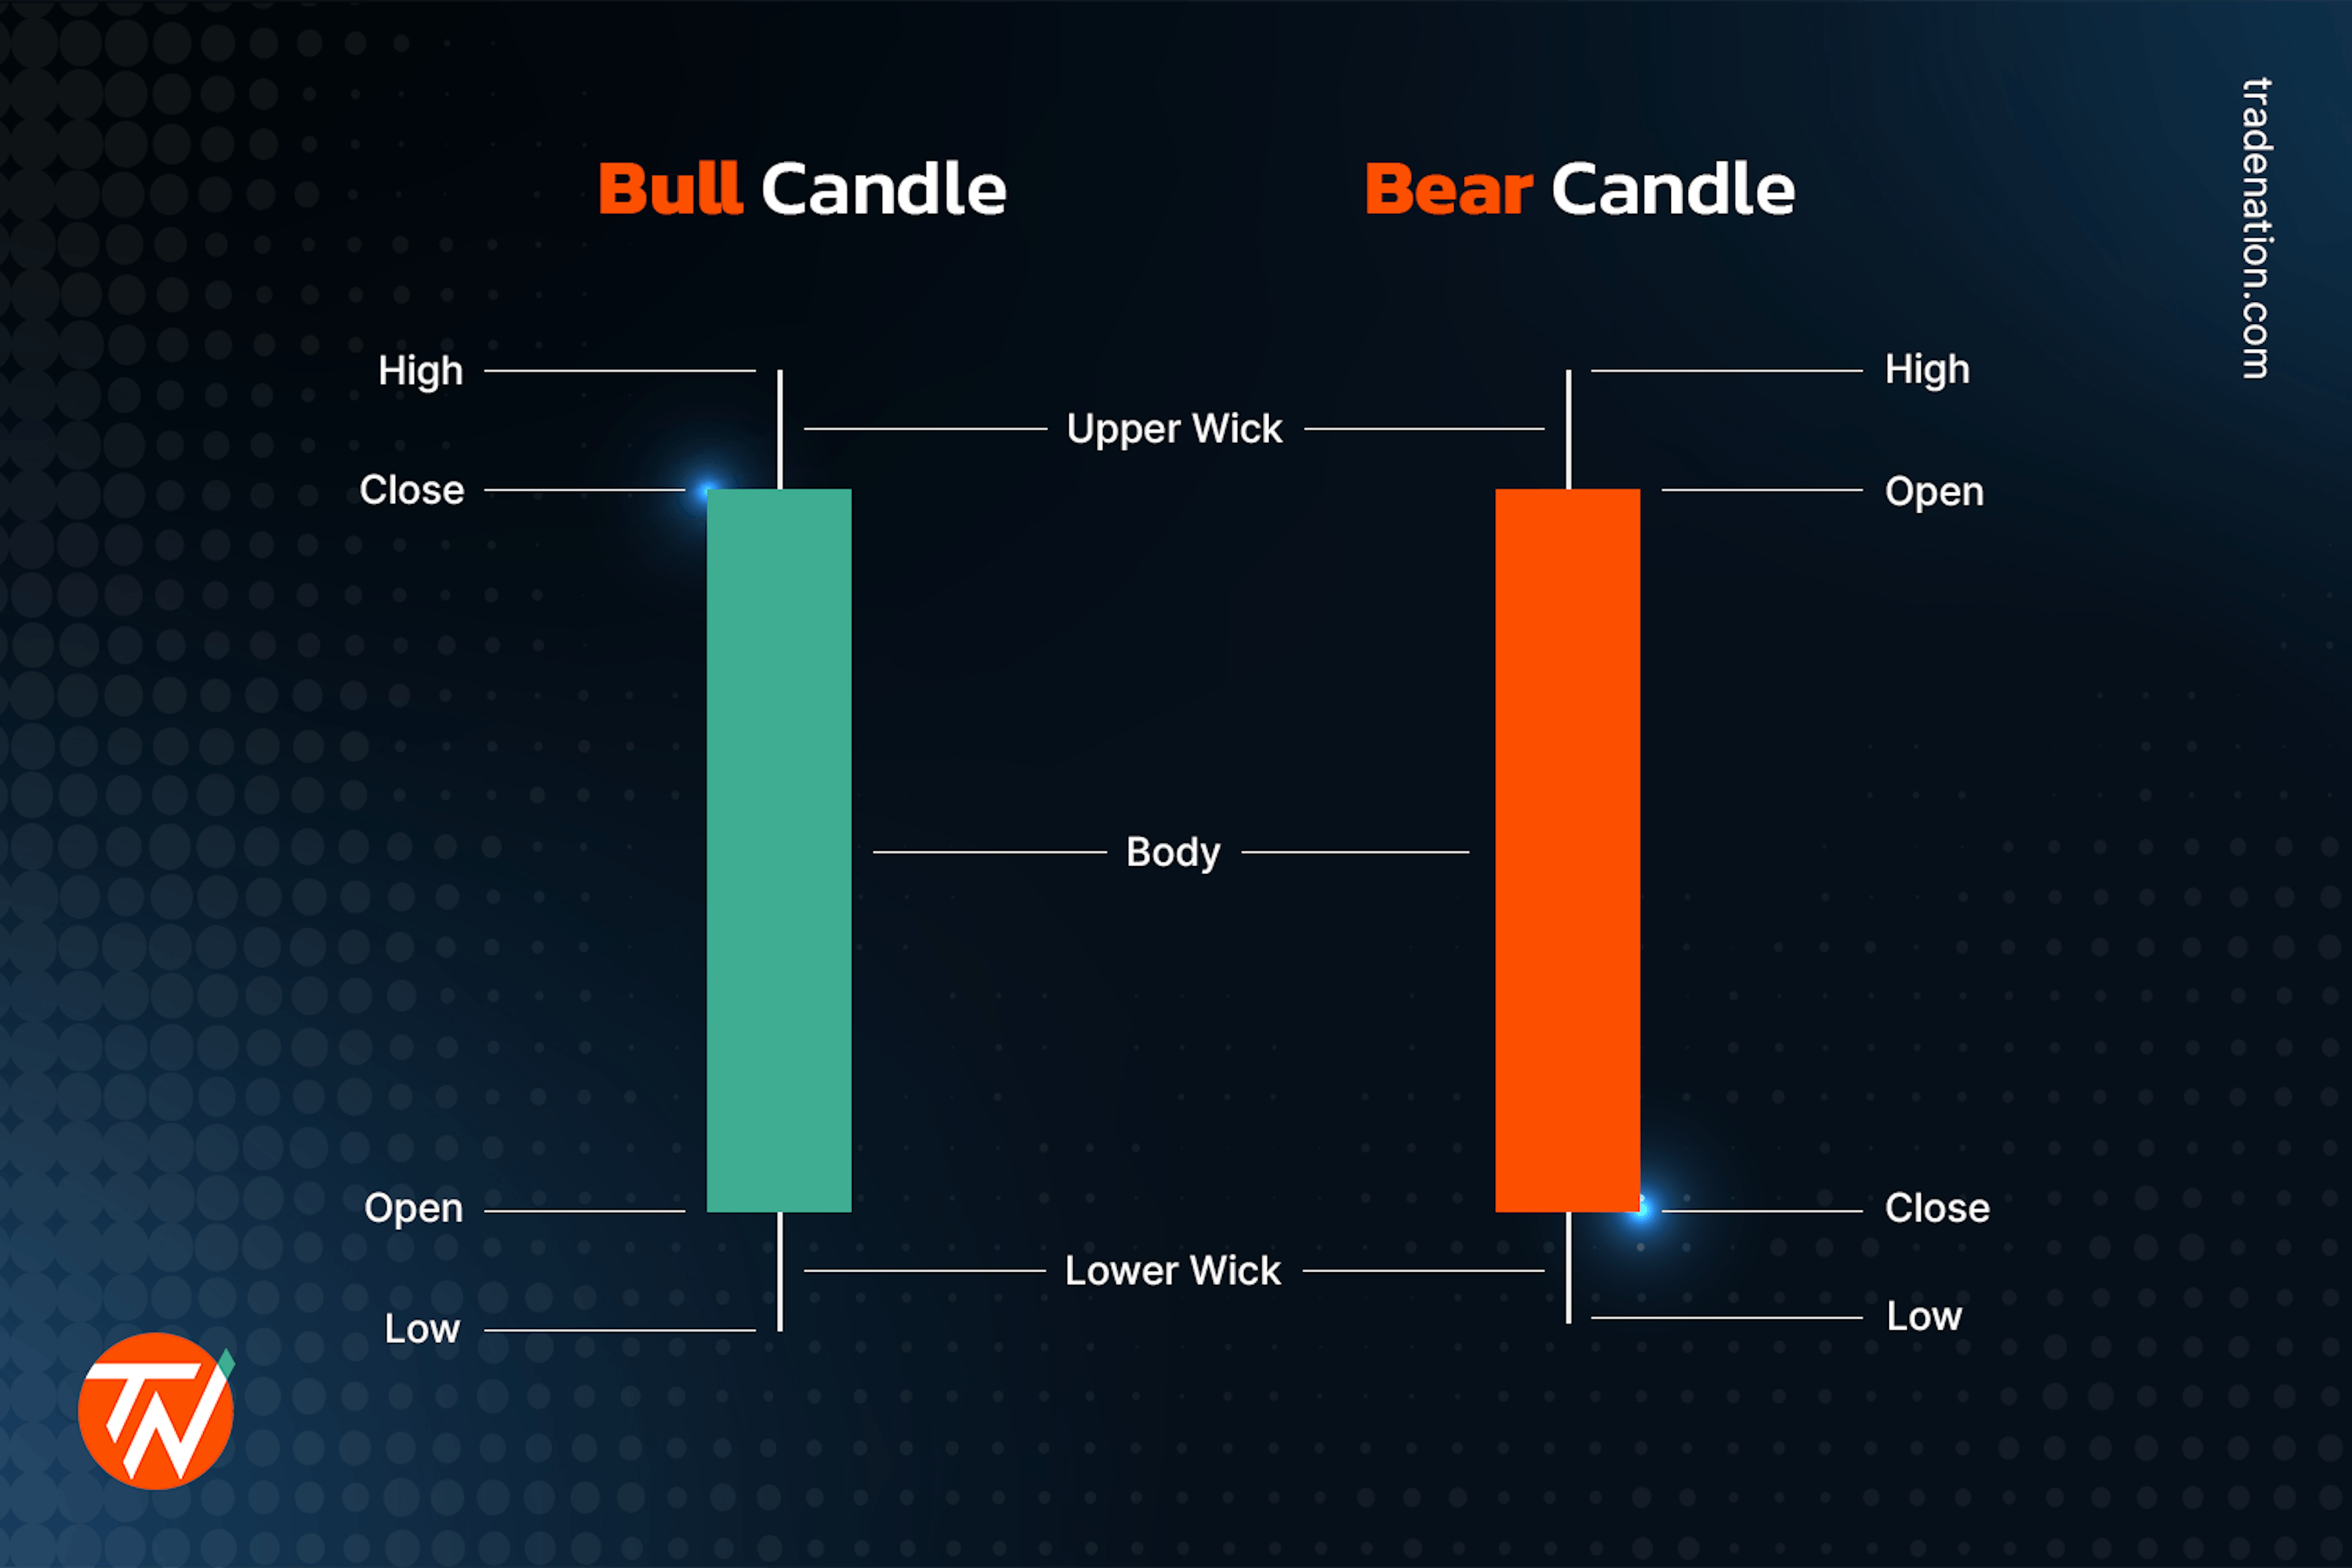 bull candlestick vs bear candlestick